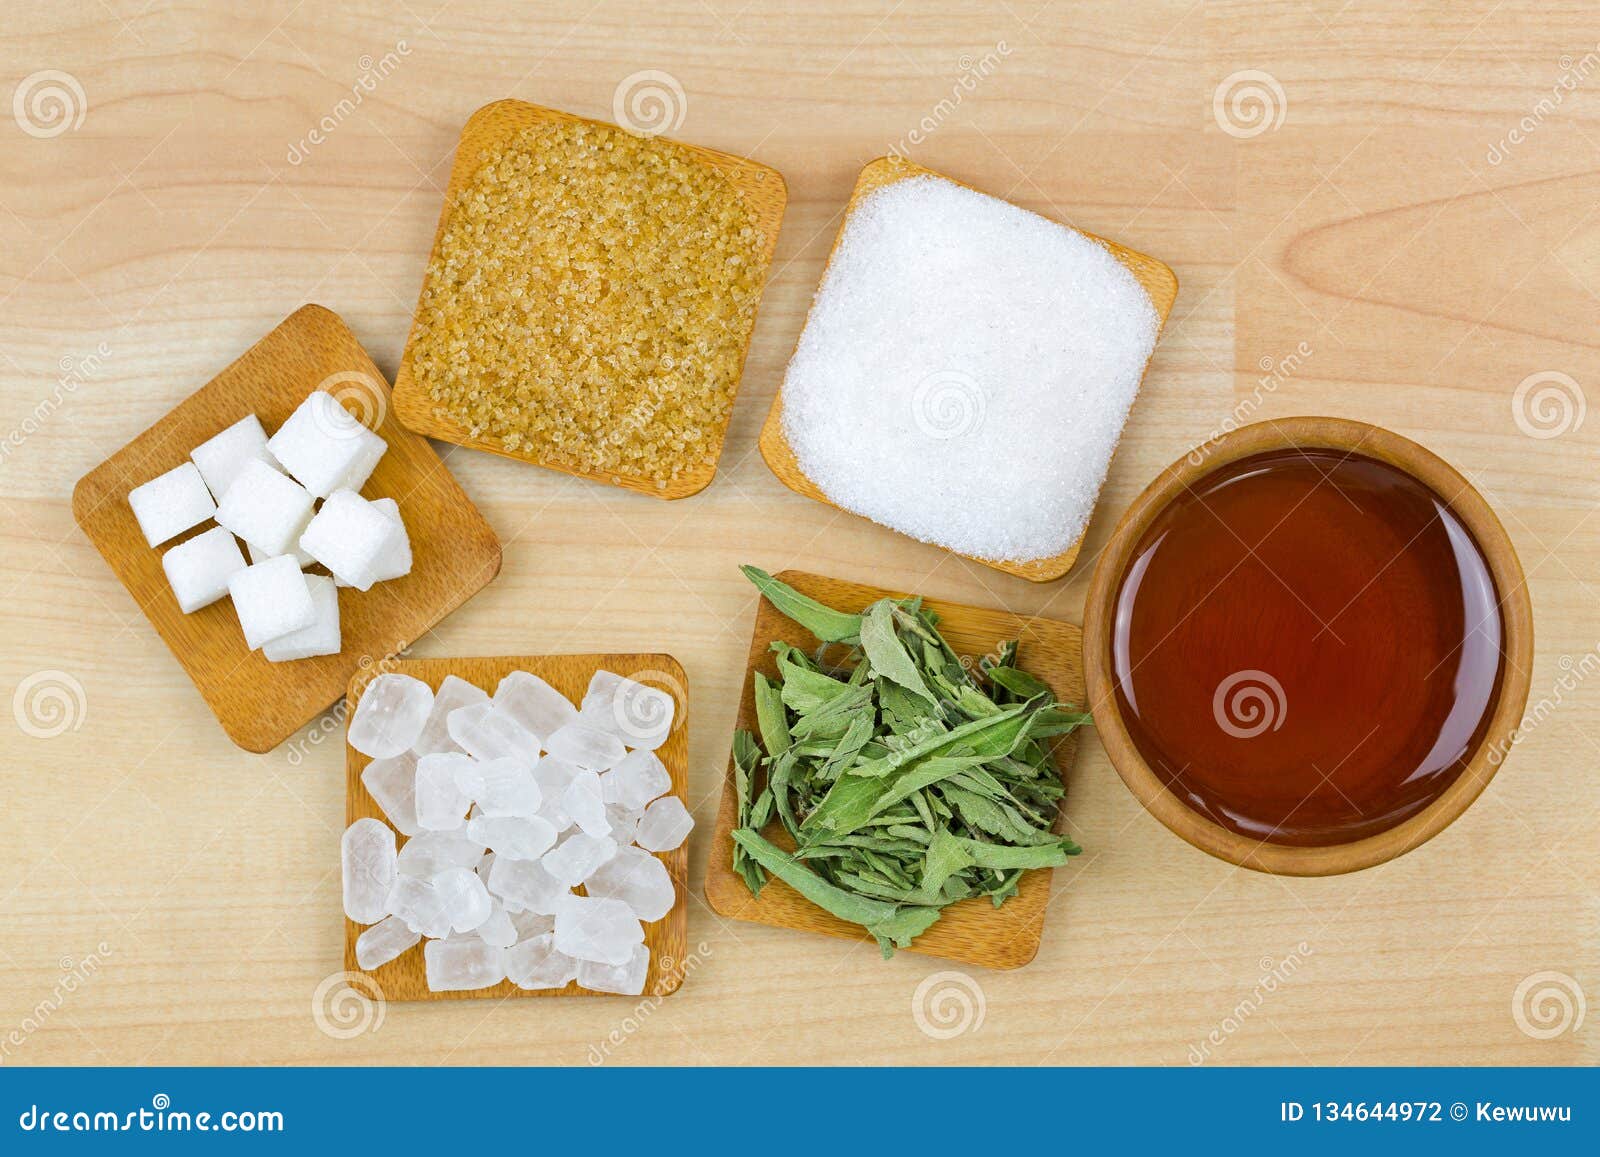 sugar cubes, brown sugar crystals, granulated white sugar, rock sugar, stevia, honey, different types of sweetness